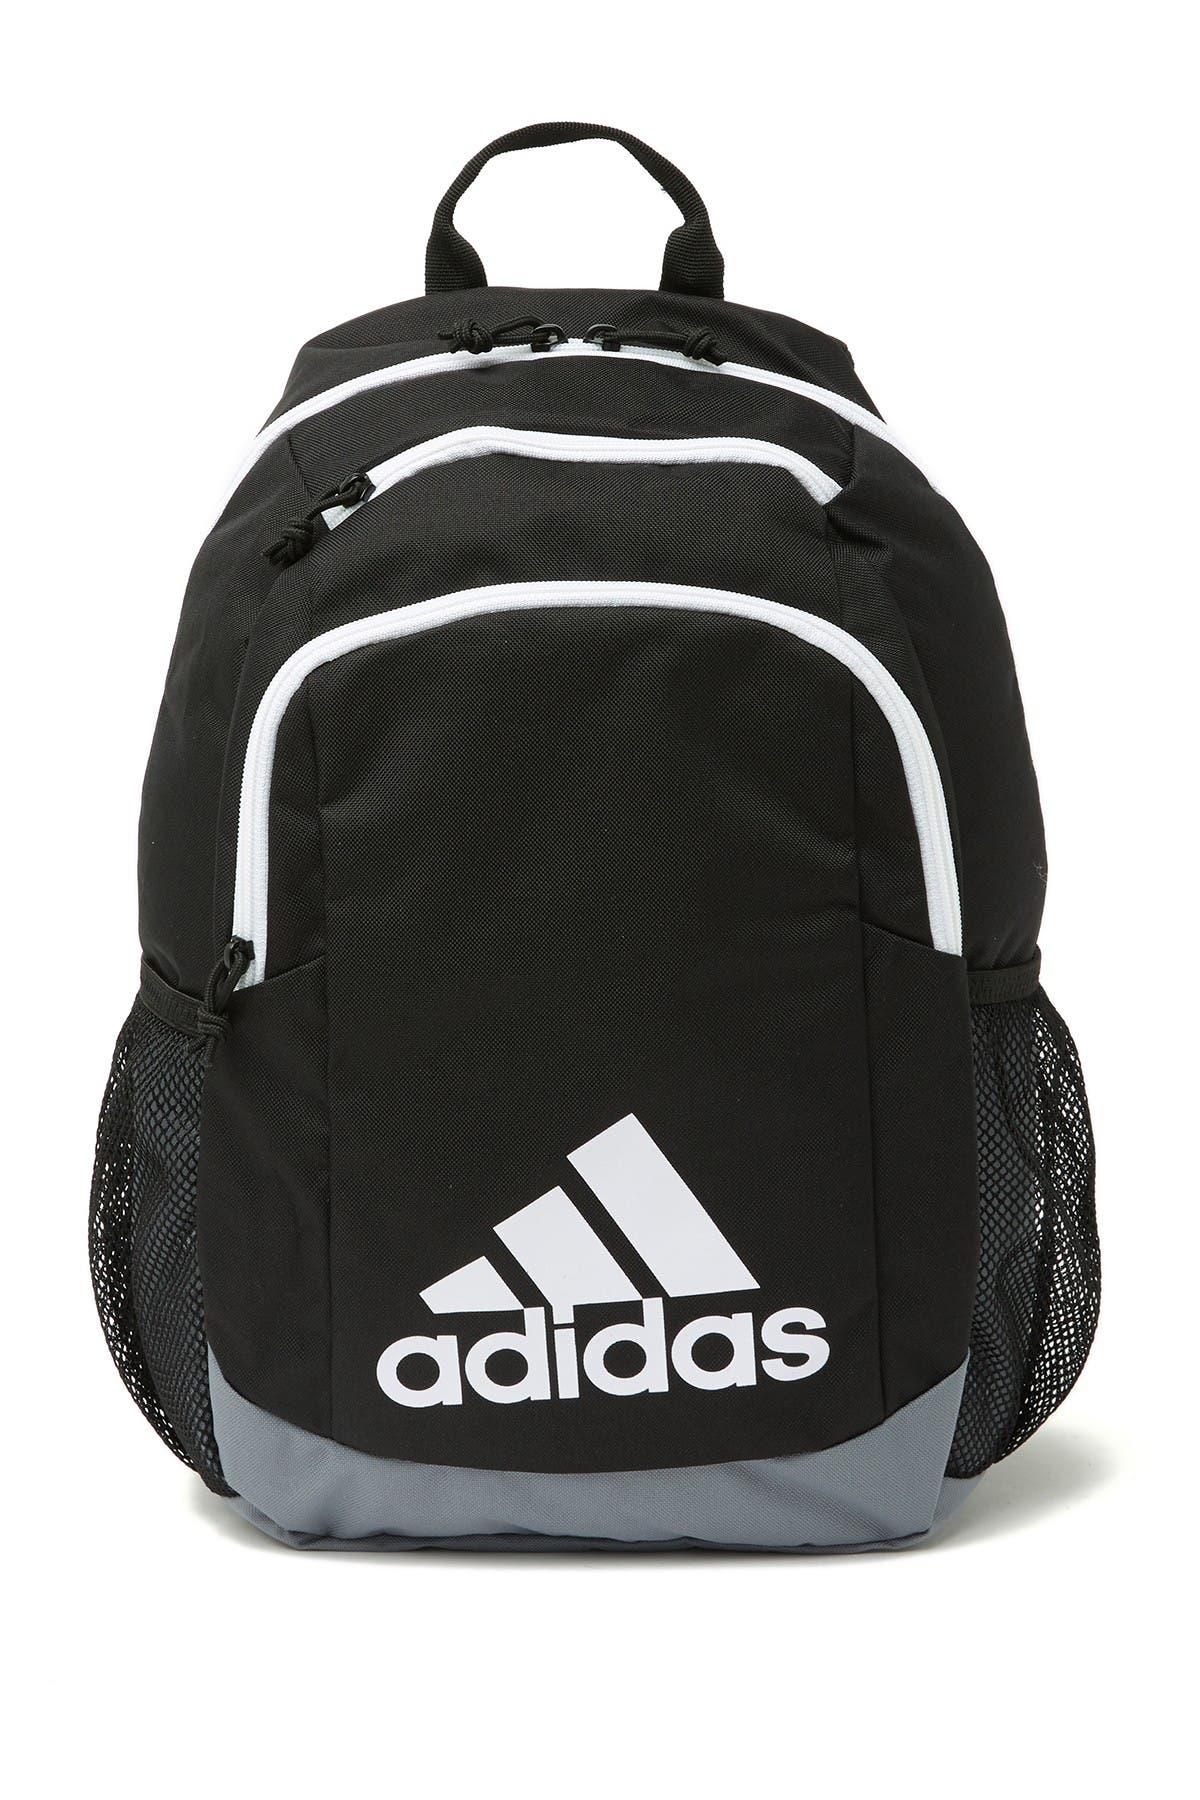 adidas youth creator backpack